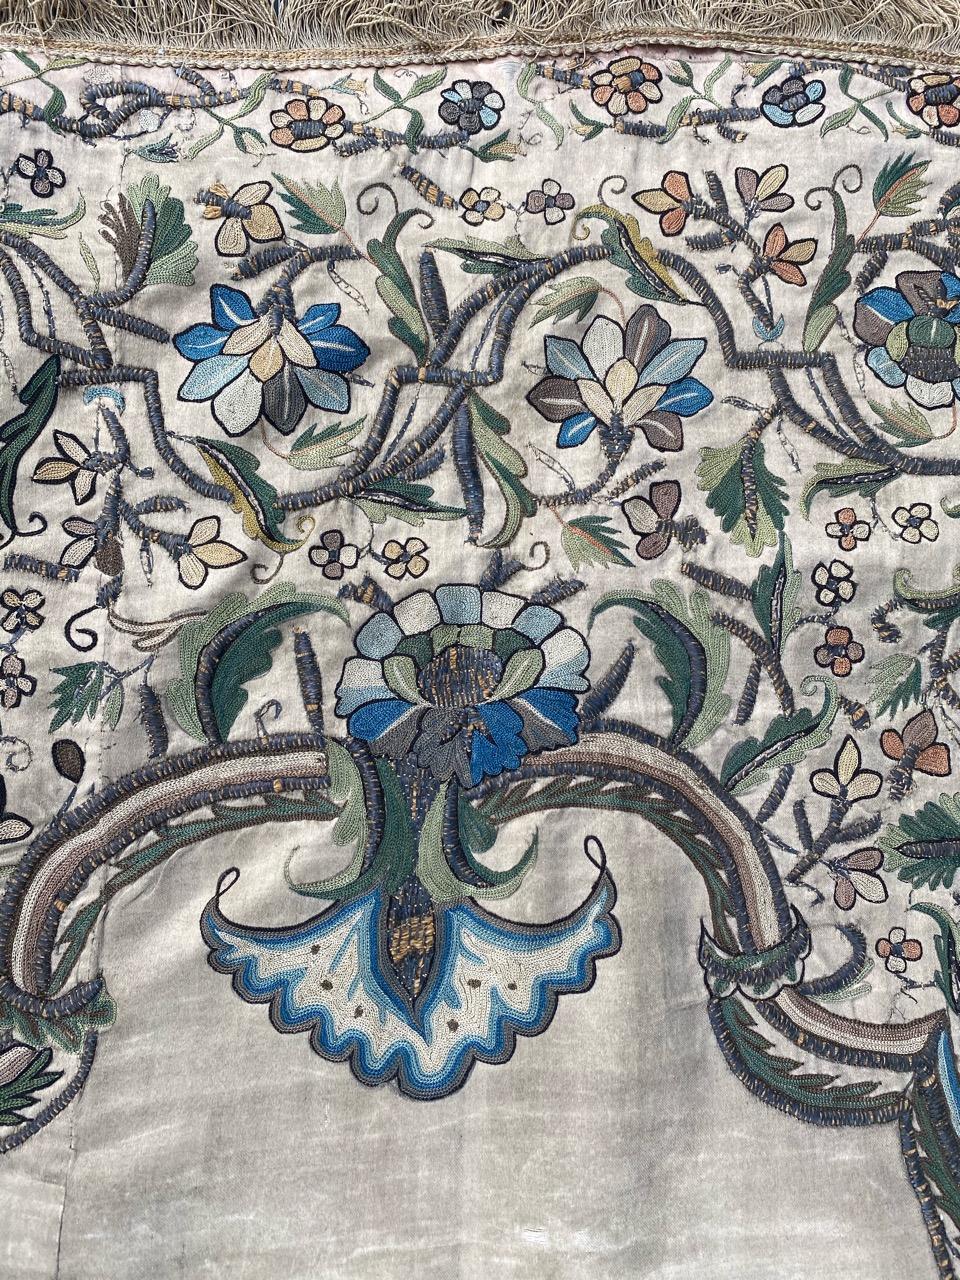 Wonderful Antique Turkish Ottoman Embroidery 2